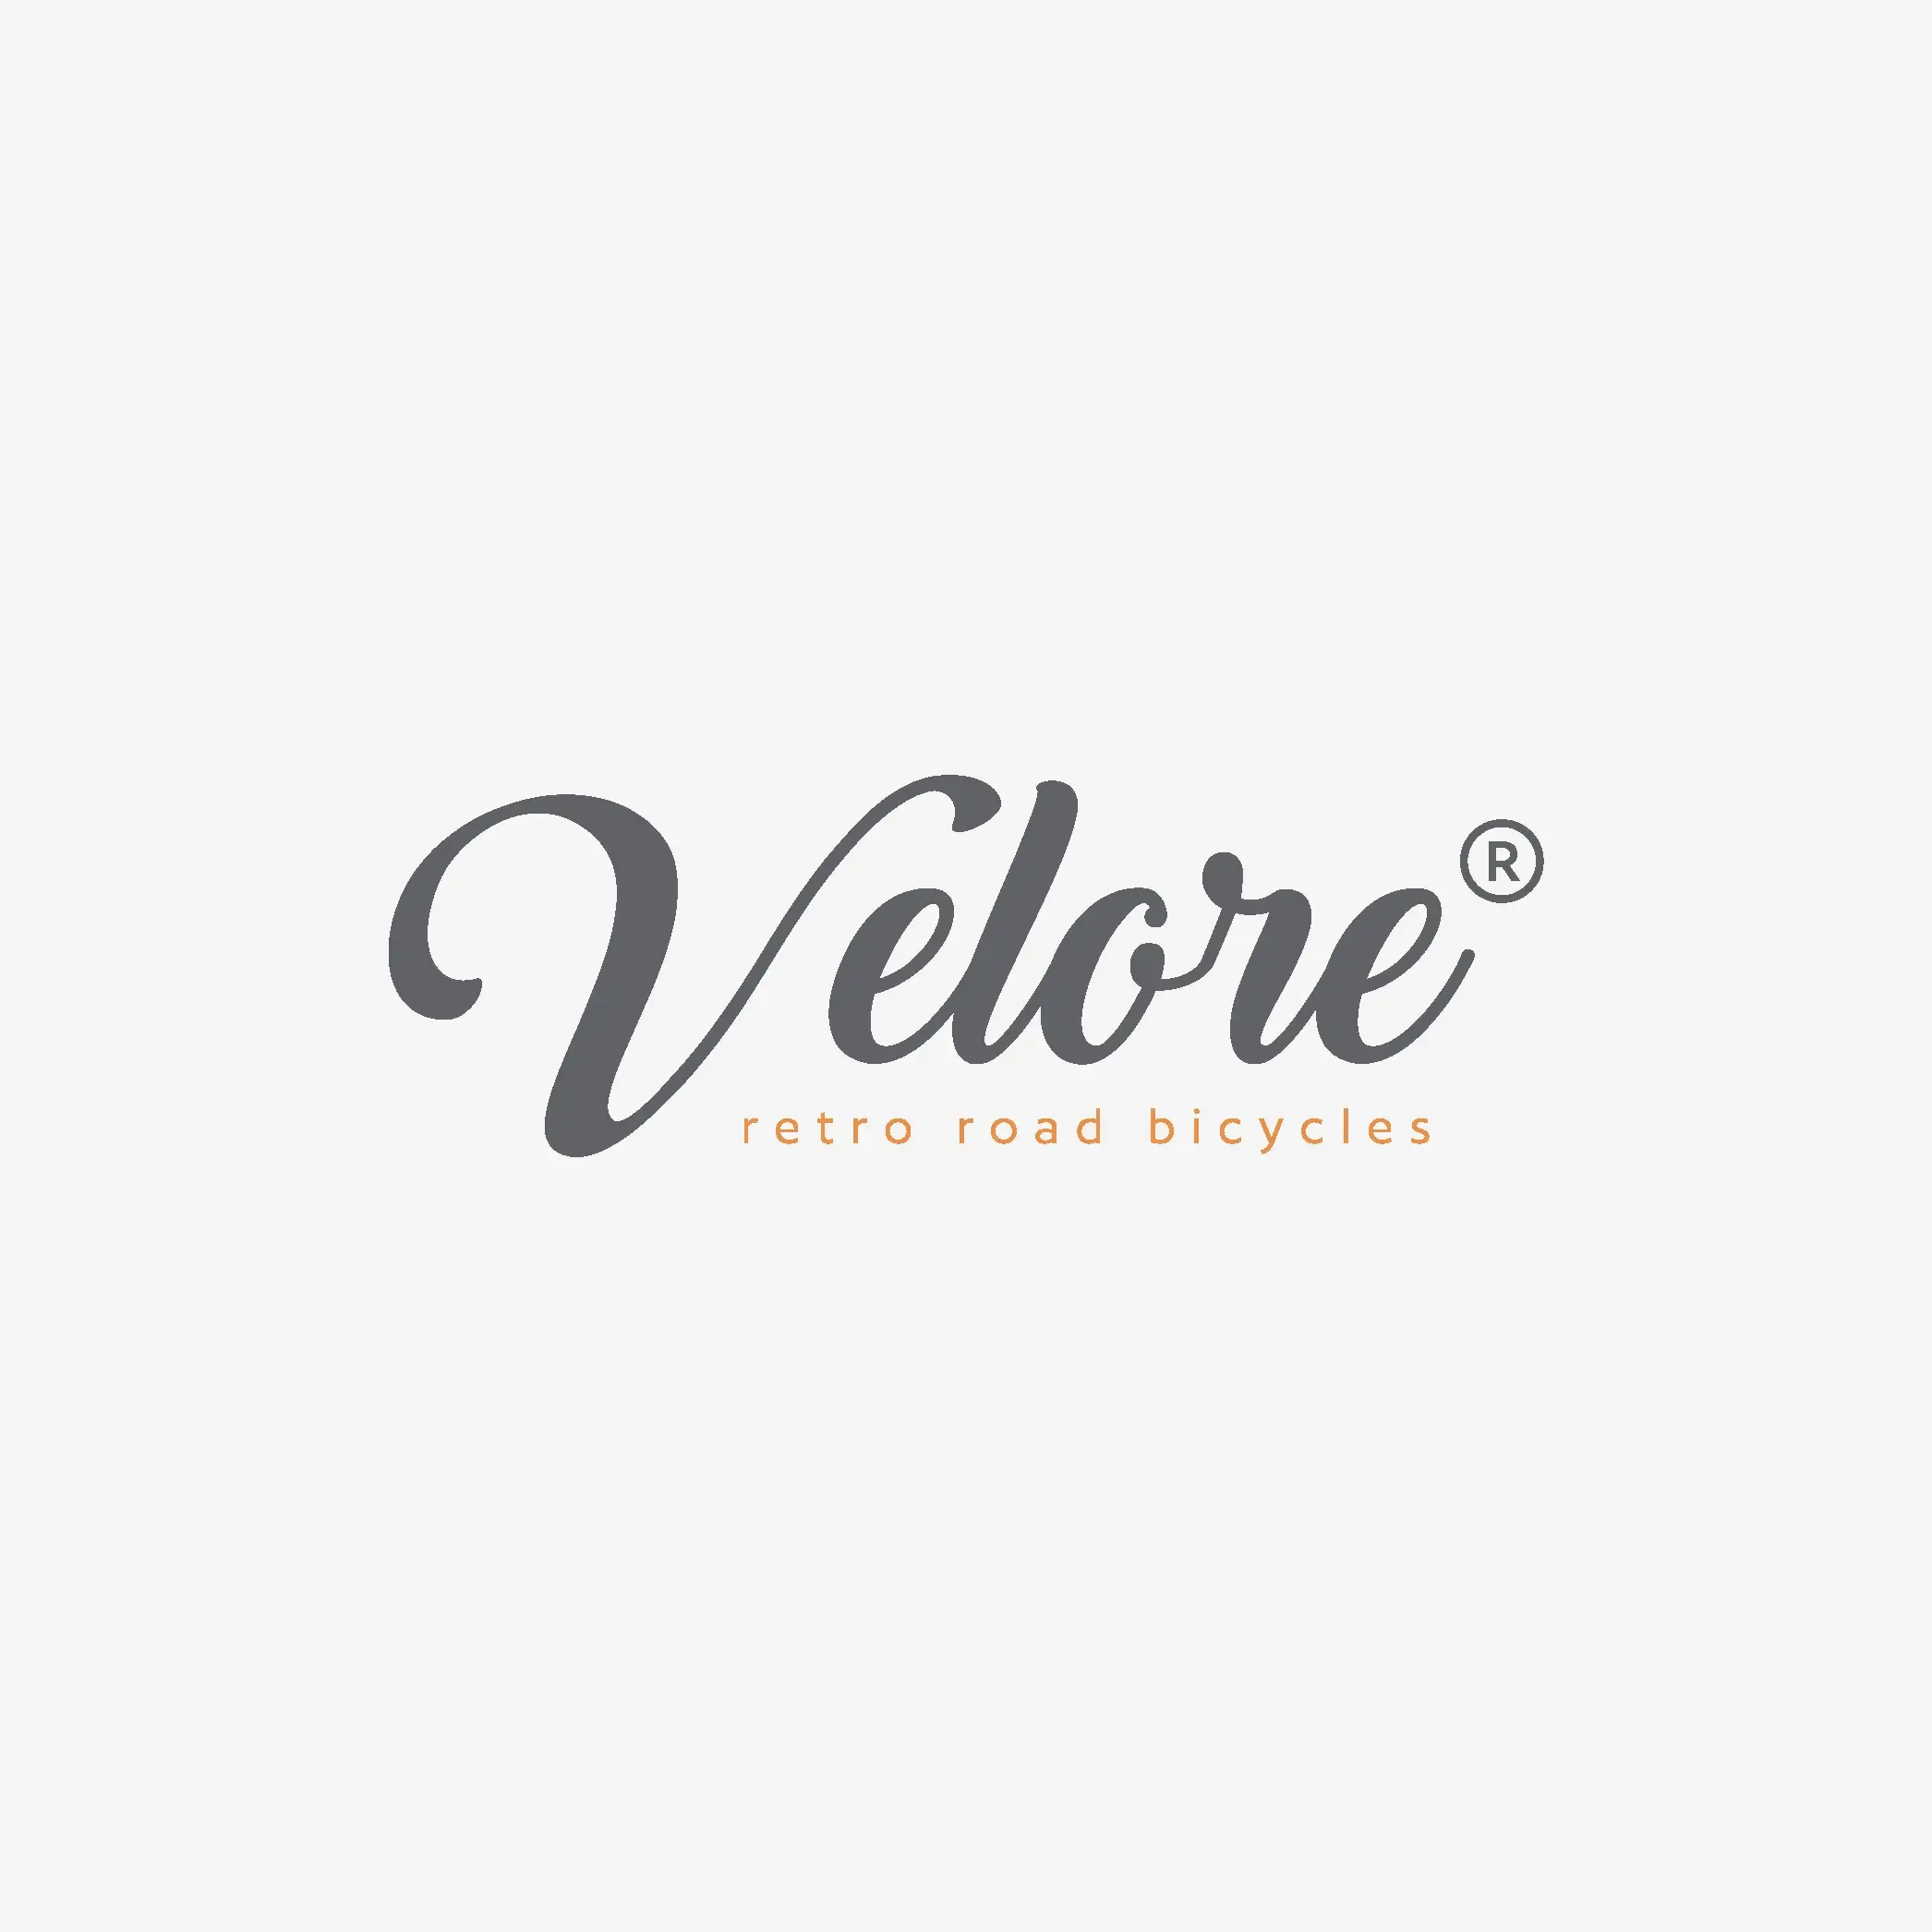 Velore Retro Road Bicycles - brand design presentation. Created by Milena Stanisavljevic, Web and Graphic Designer at miletart.com